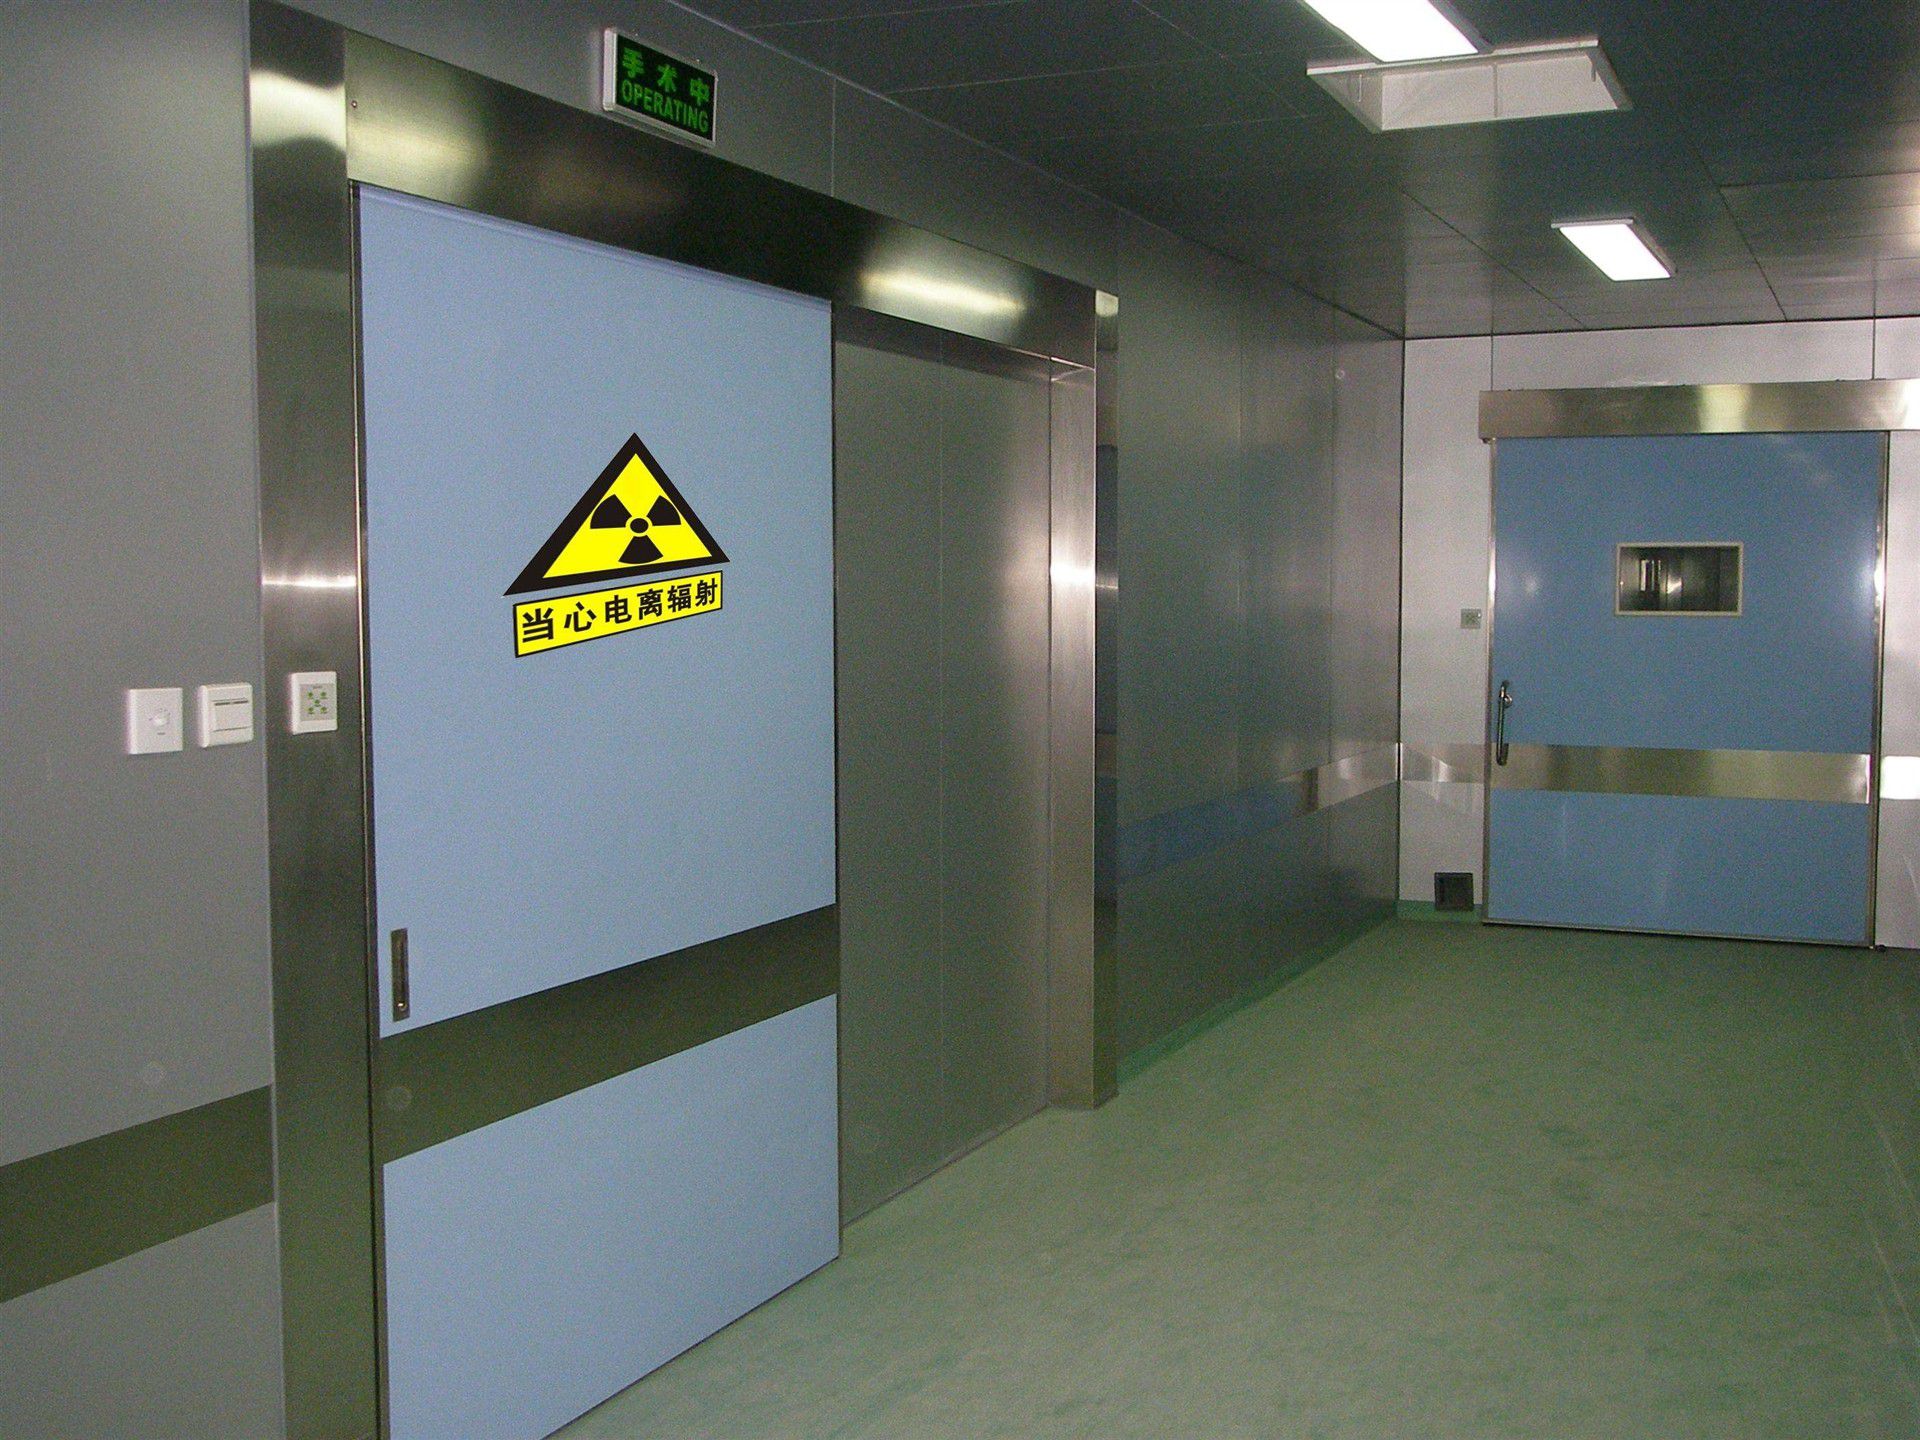 CT室铅门,铅箱,3mm铅板,CT室铅板,放射科铅板,铅板厂家-上饶CT室铅板公司